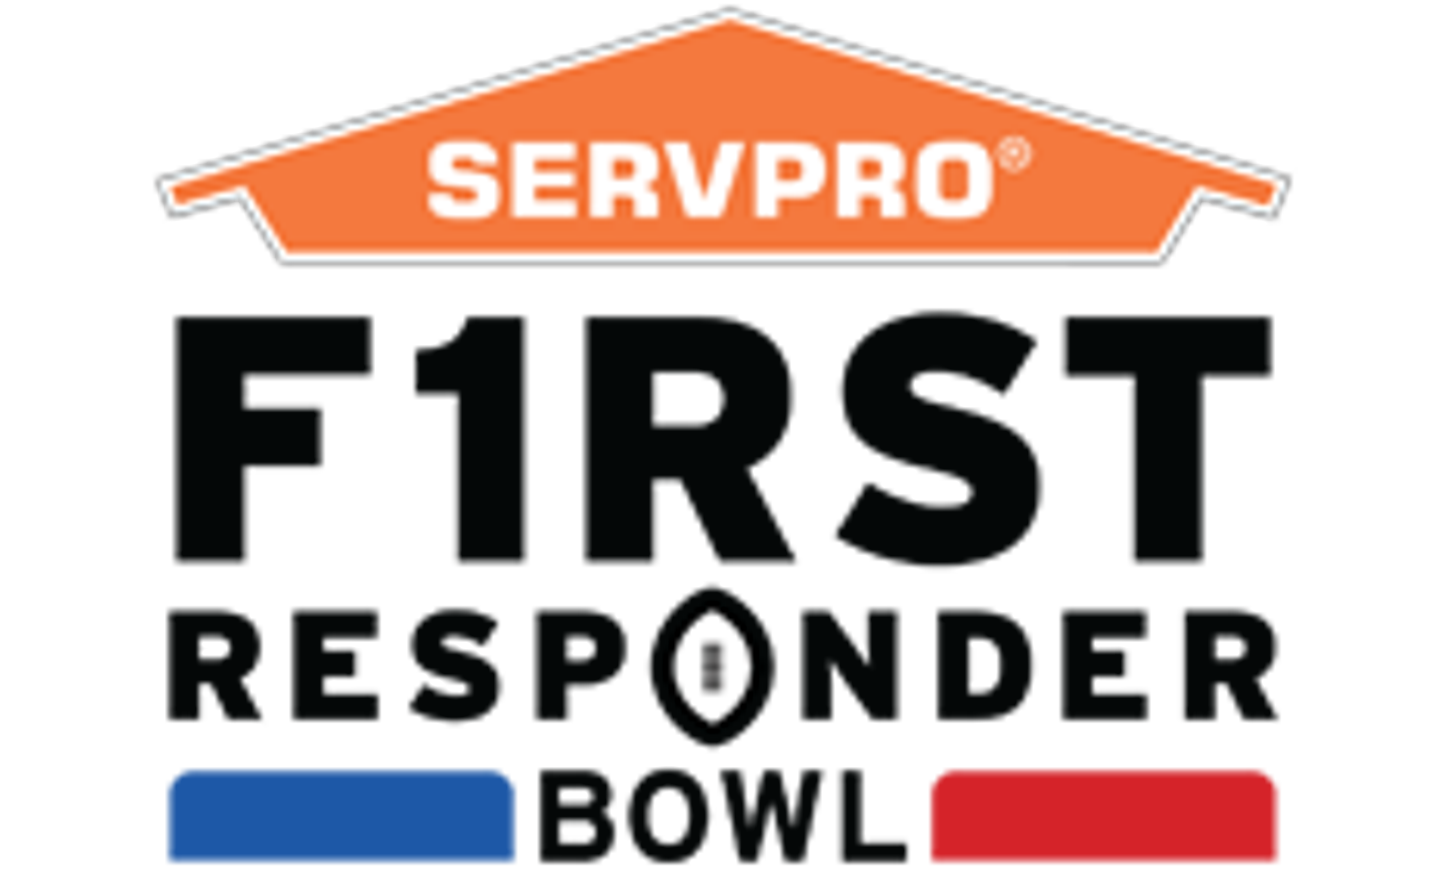 SERVPRO first responders bowl logo